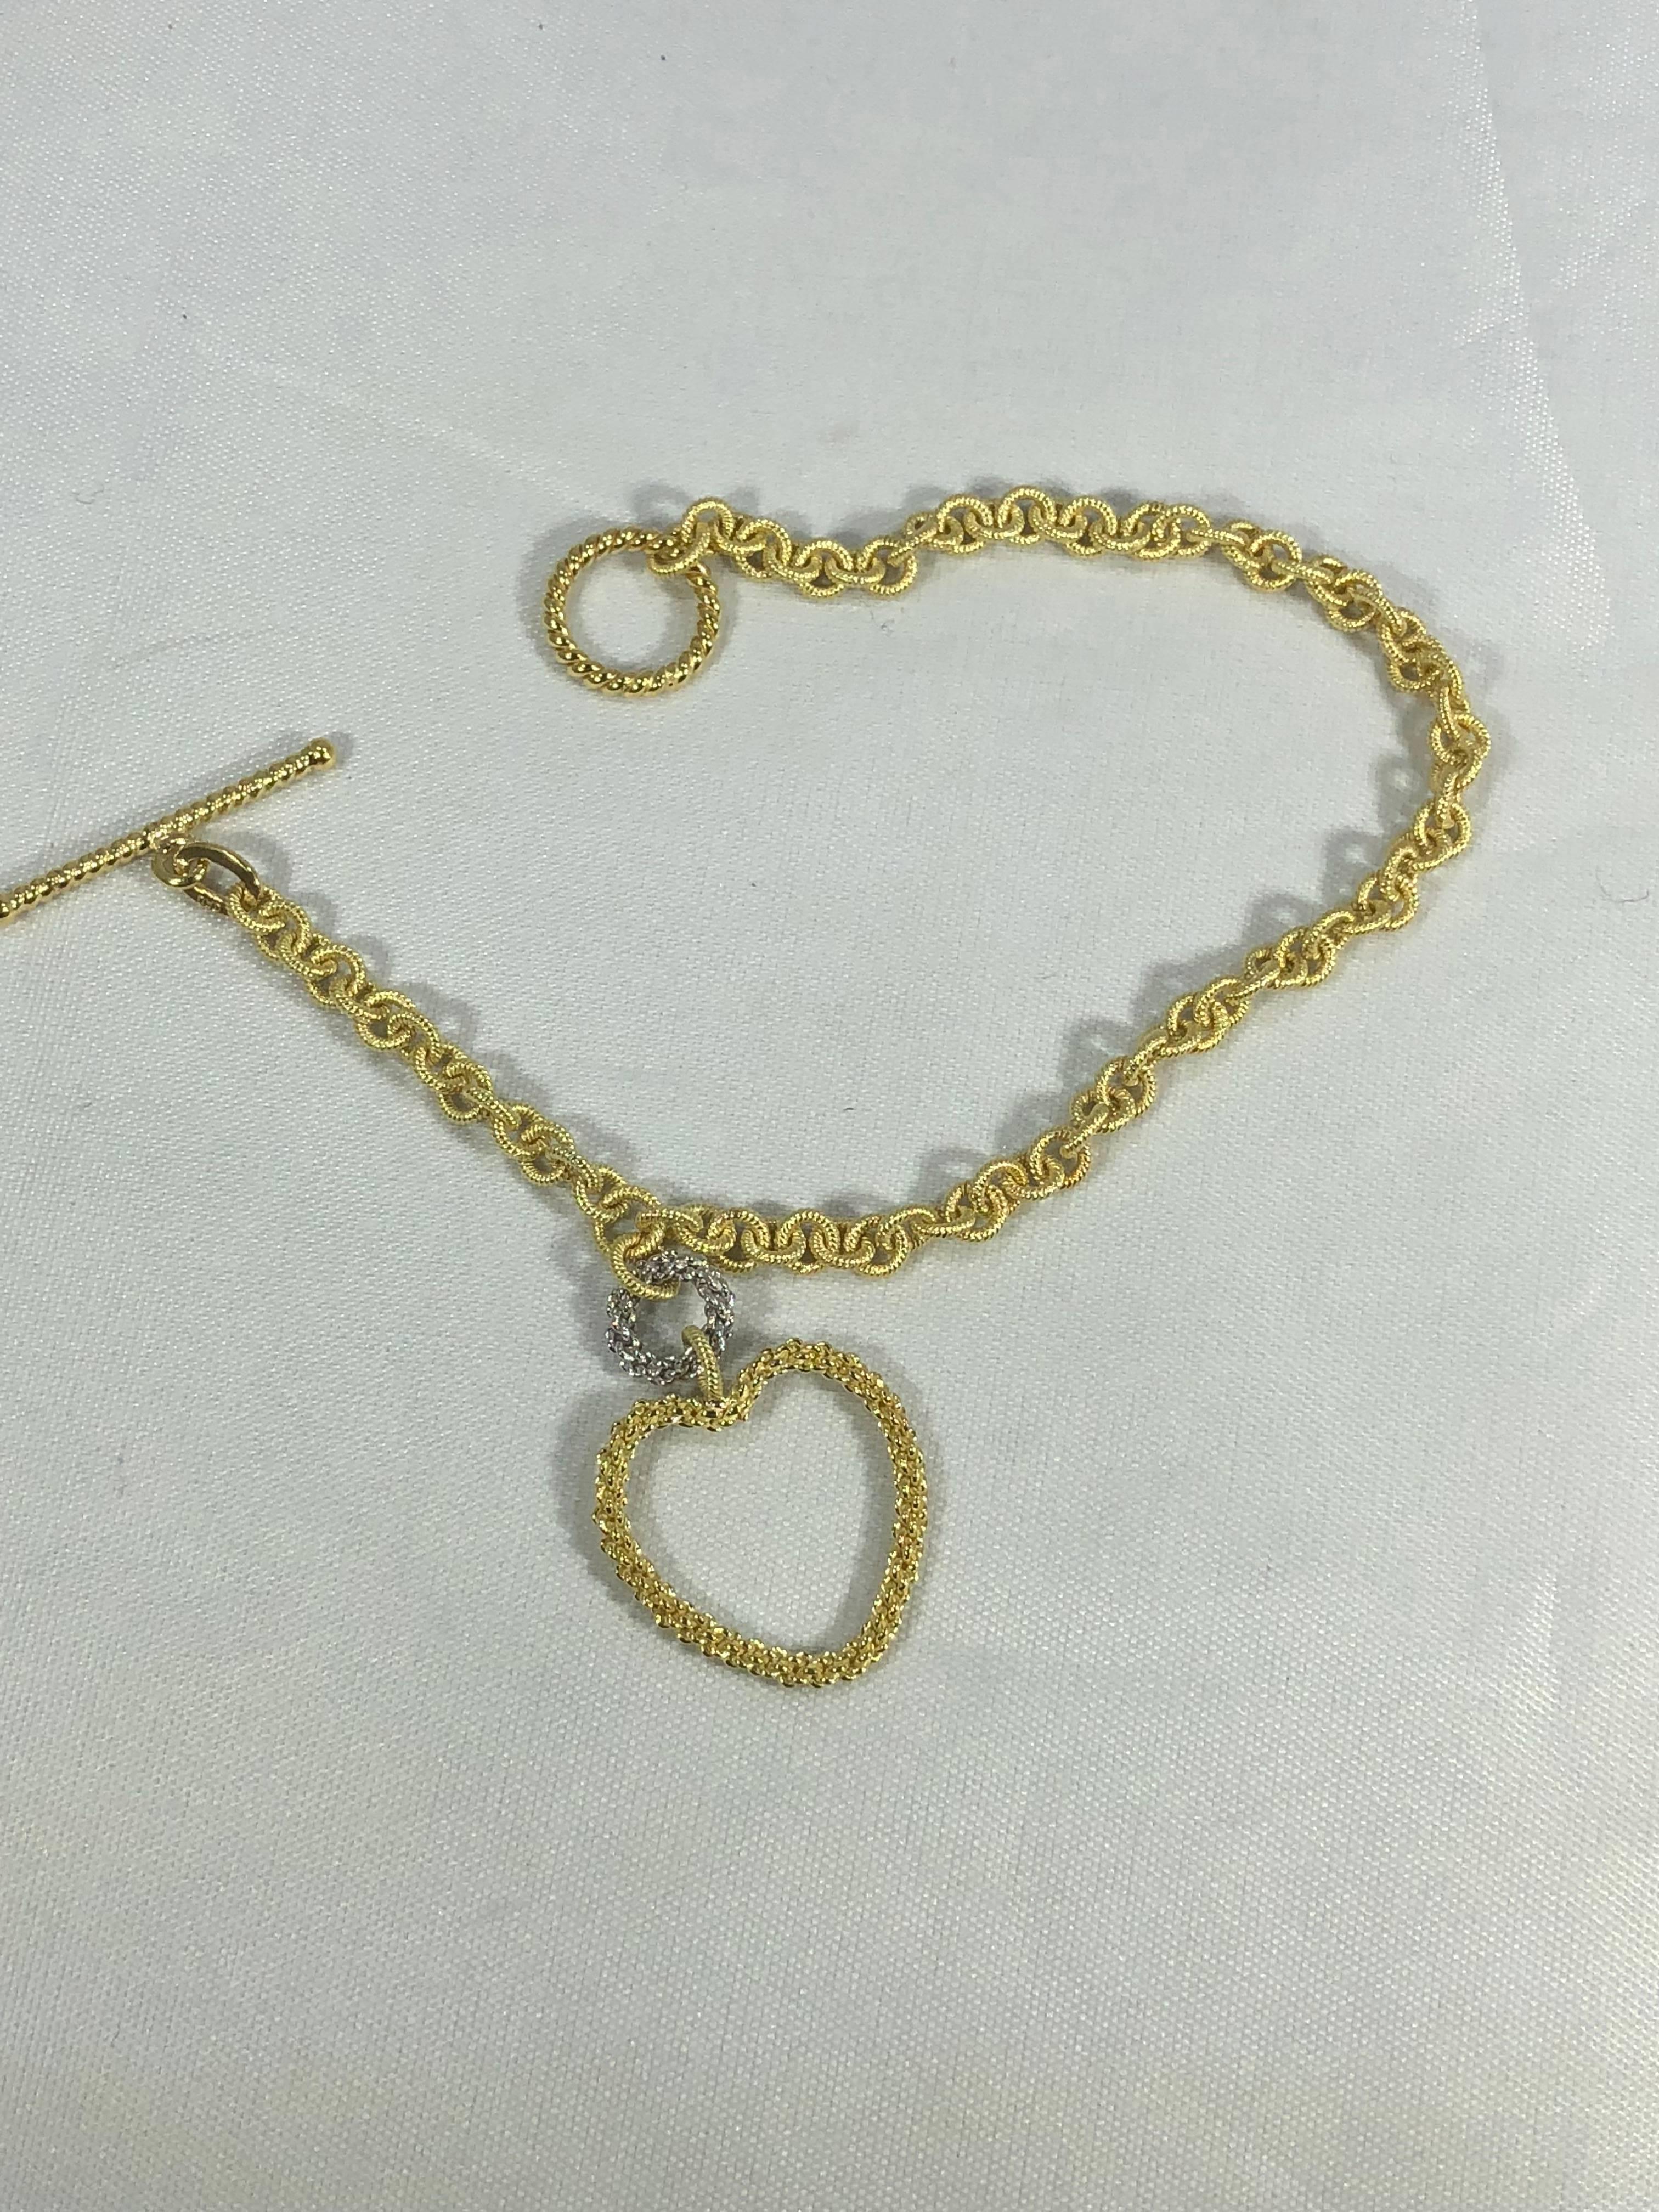 Women's Old World Chain 18 Karat Two-Tone White/Yellow Gold Fancy Anchor Link Bracelet